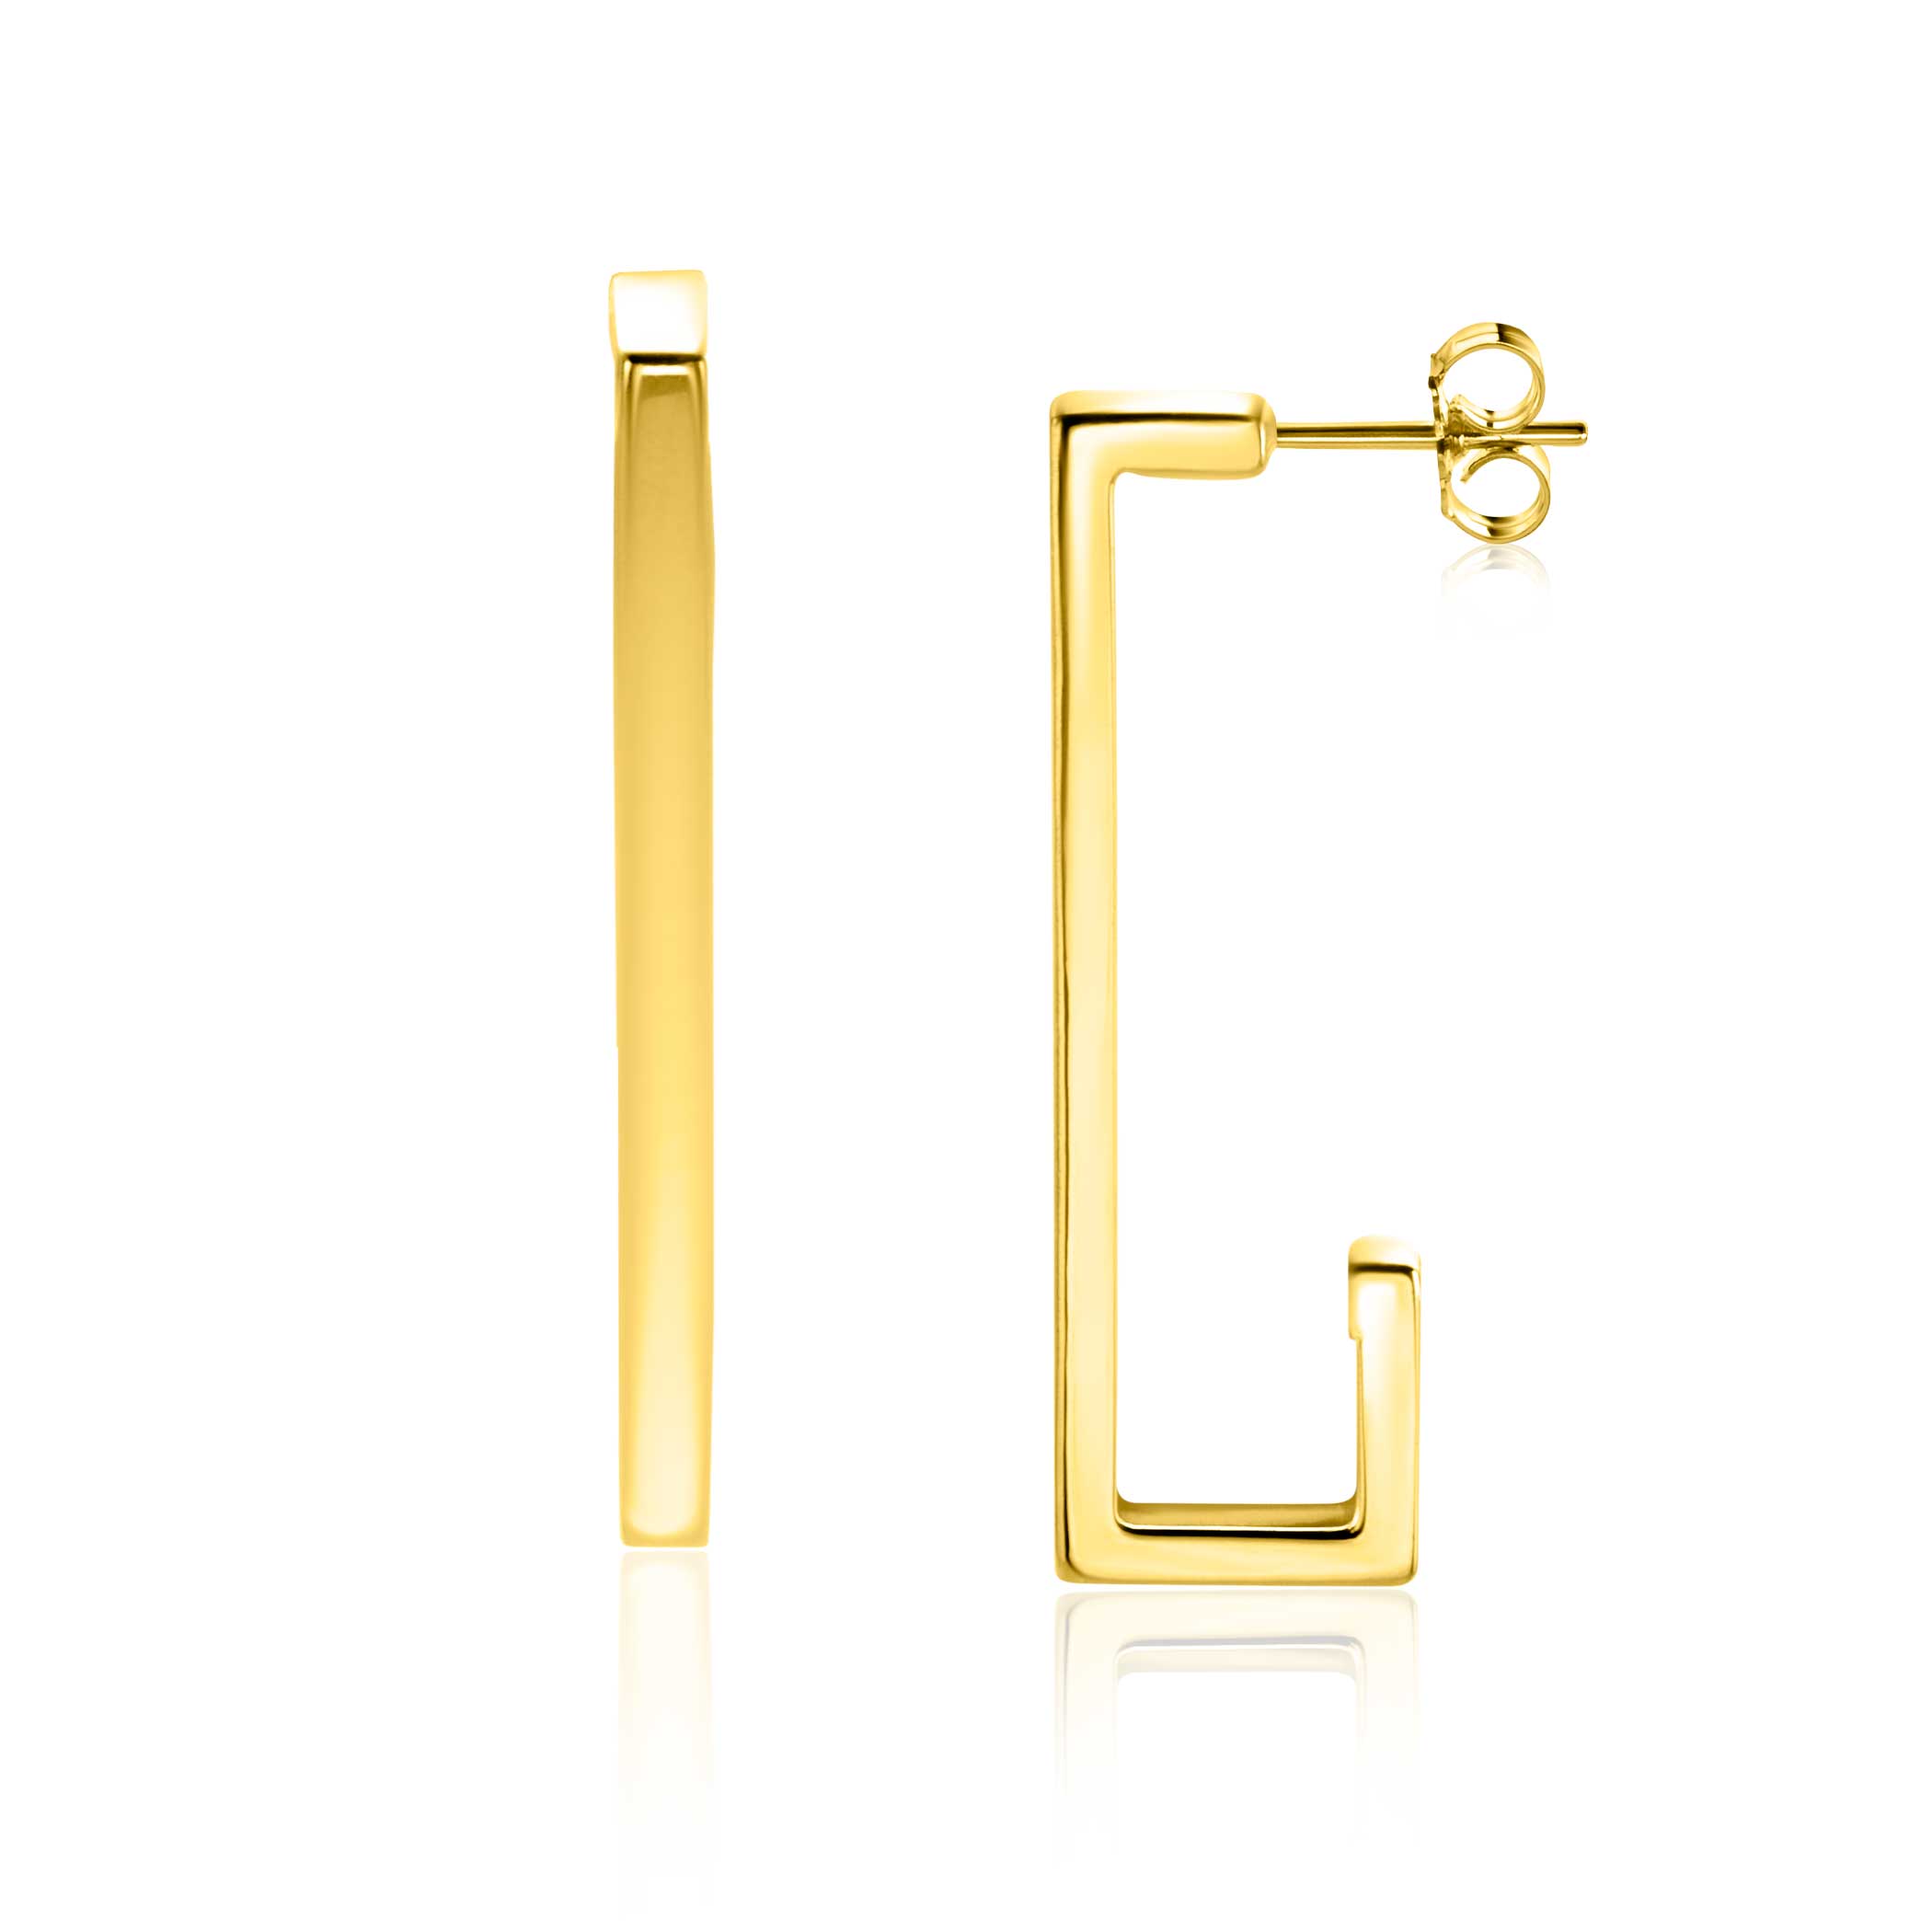 33mm ZINZI Gold 14 karat gold ear studs with large sleek rectangular shape. Size 33 x 2.4mm. ZGO483
